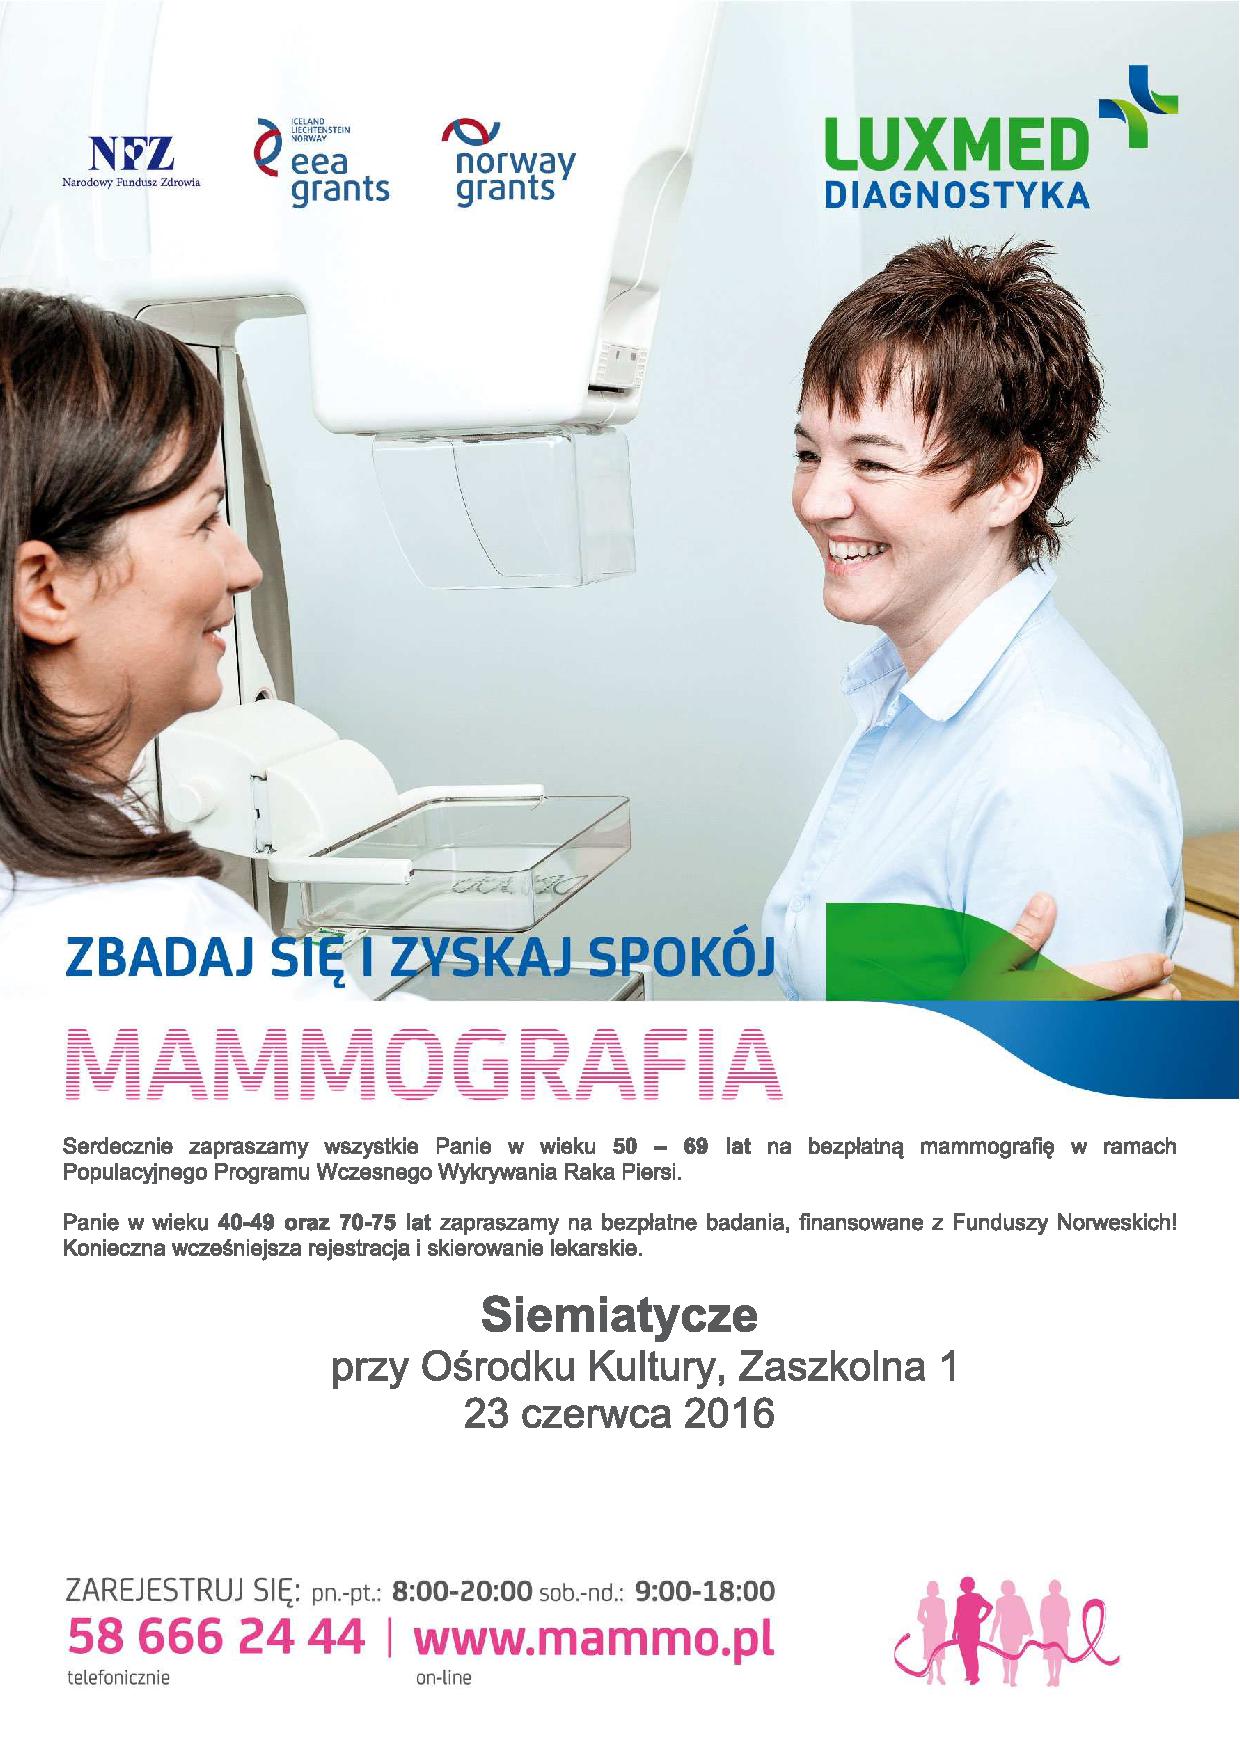 8.26e. mammografia plakat wersja elektroniczna A3